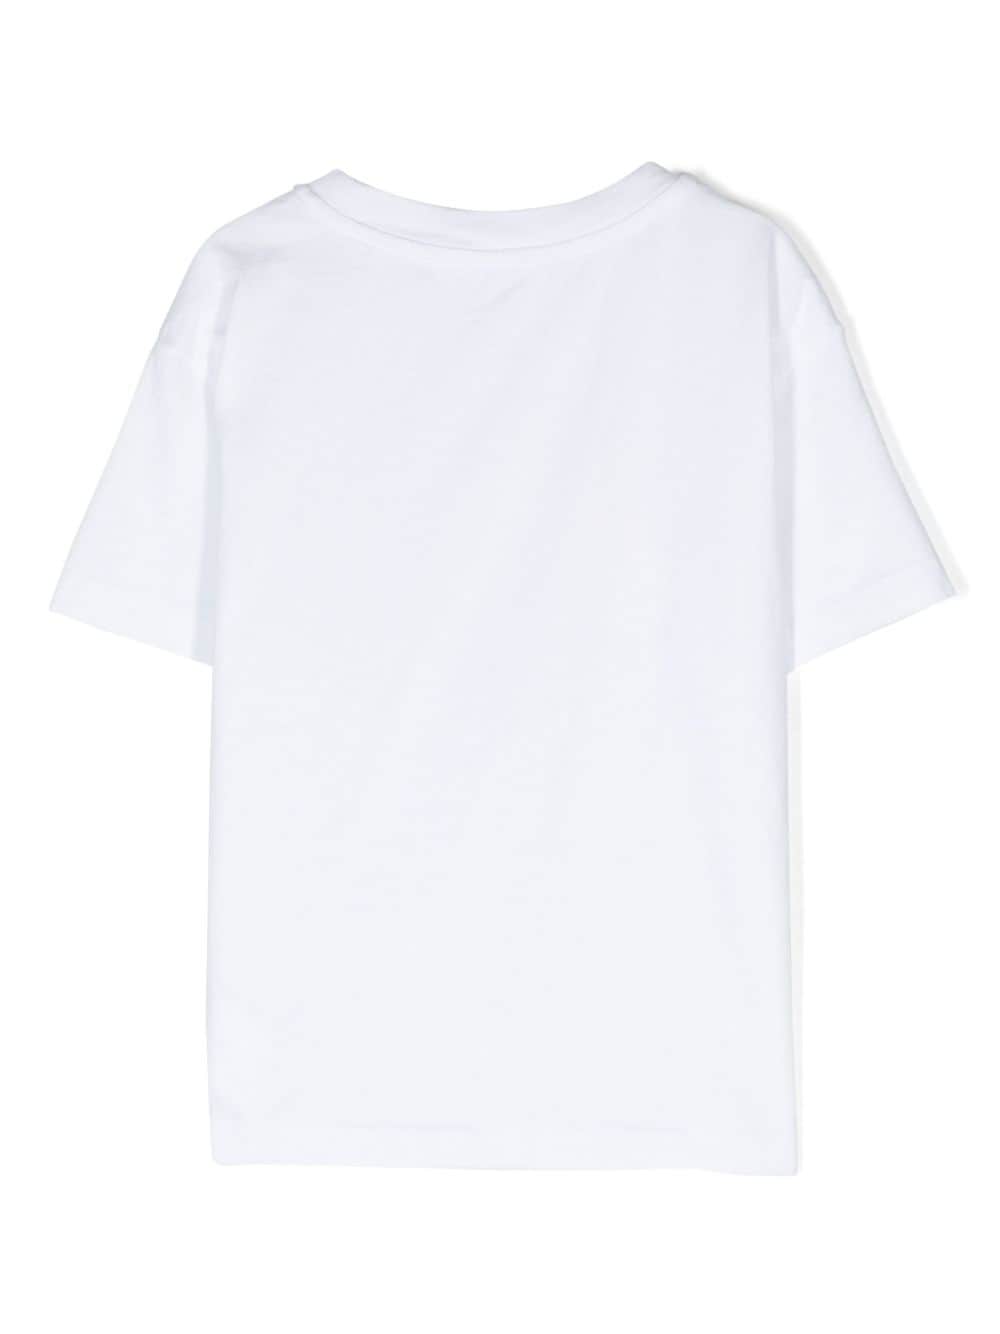 T-shirt bianca per bambino con stampa orso